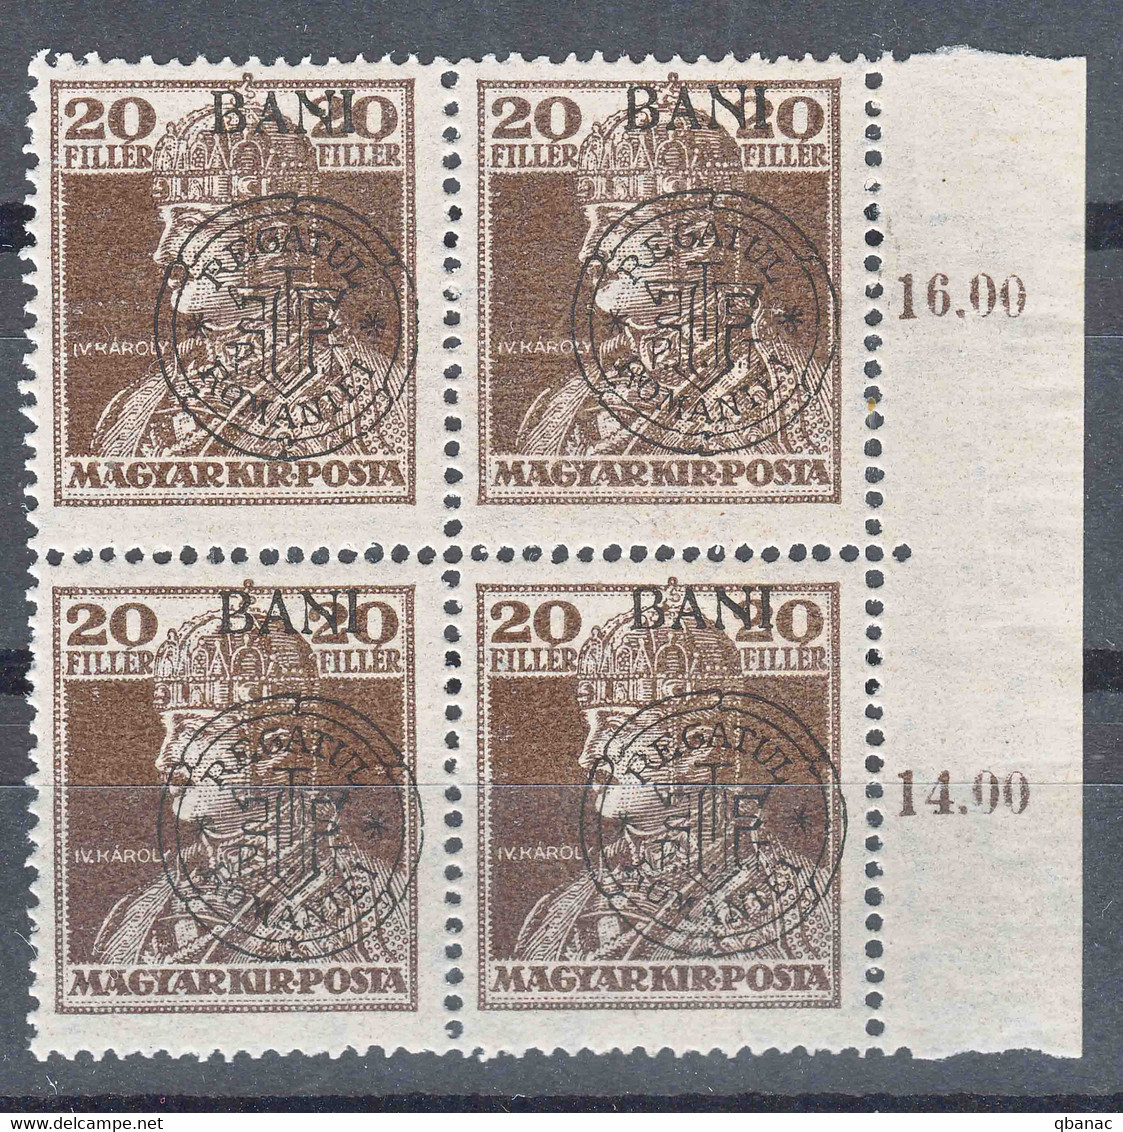 Romania Overprint On Hungary Stamps Occupation Transylvania 1919 Mi#47 I Mint Never Hinged Pc. Of Four - Transilvania